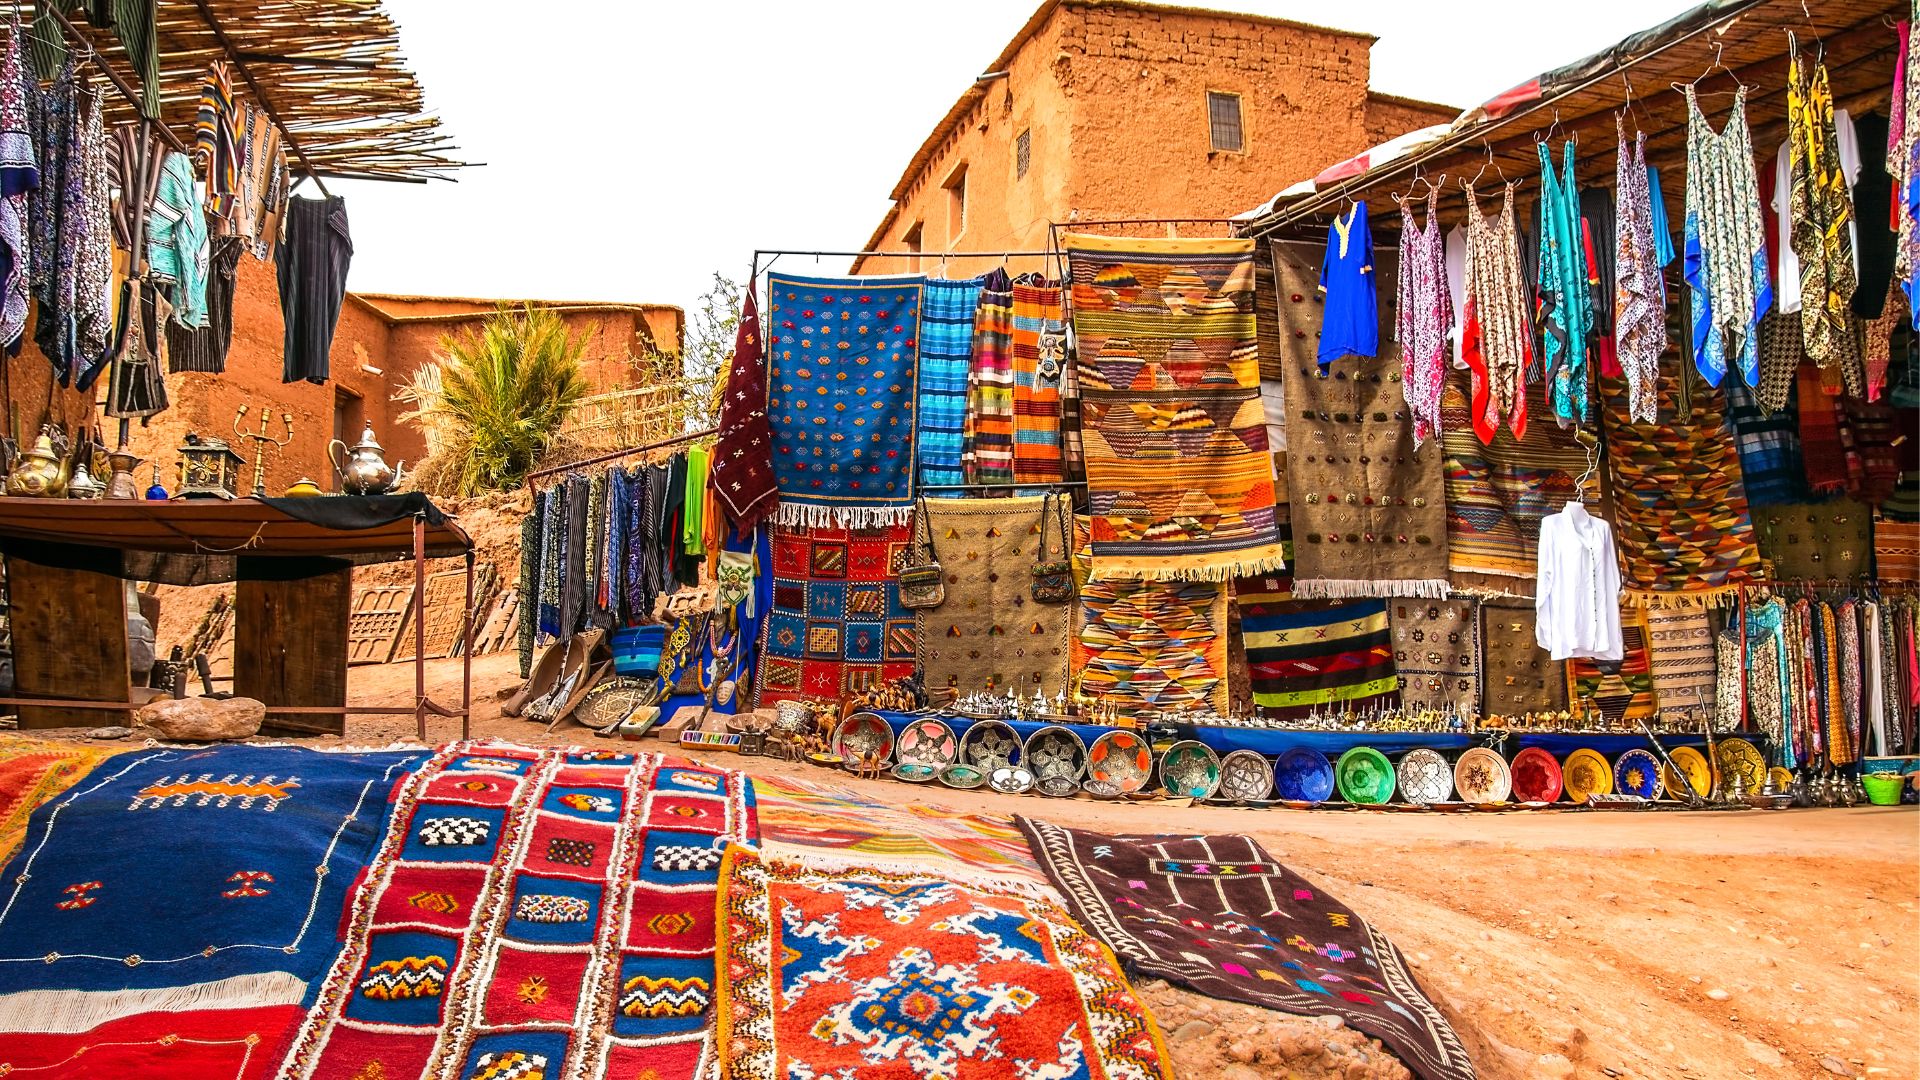 Excursion to Ouarzazate and Kasbah Ait Ben Haddou